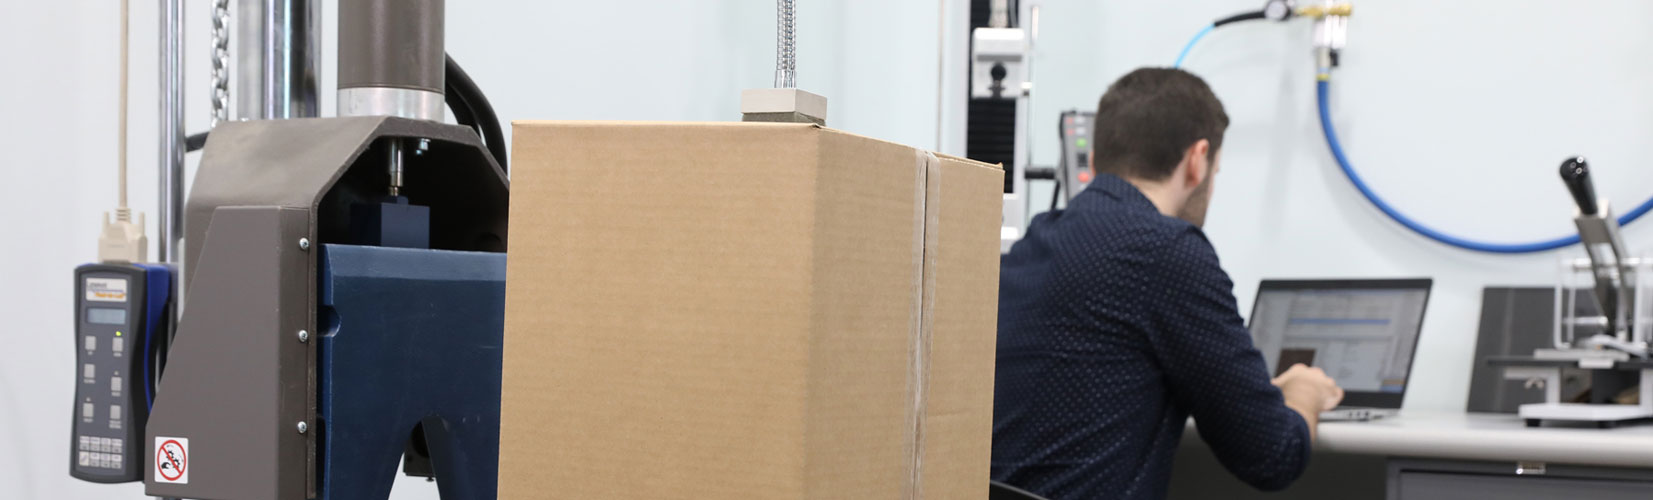 Pregis engineer performing drop test on cardboard box package inside a laboratory